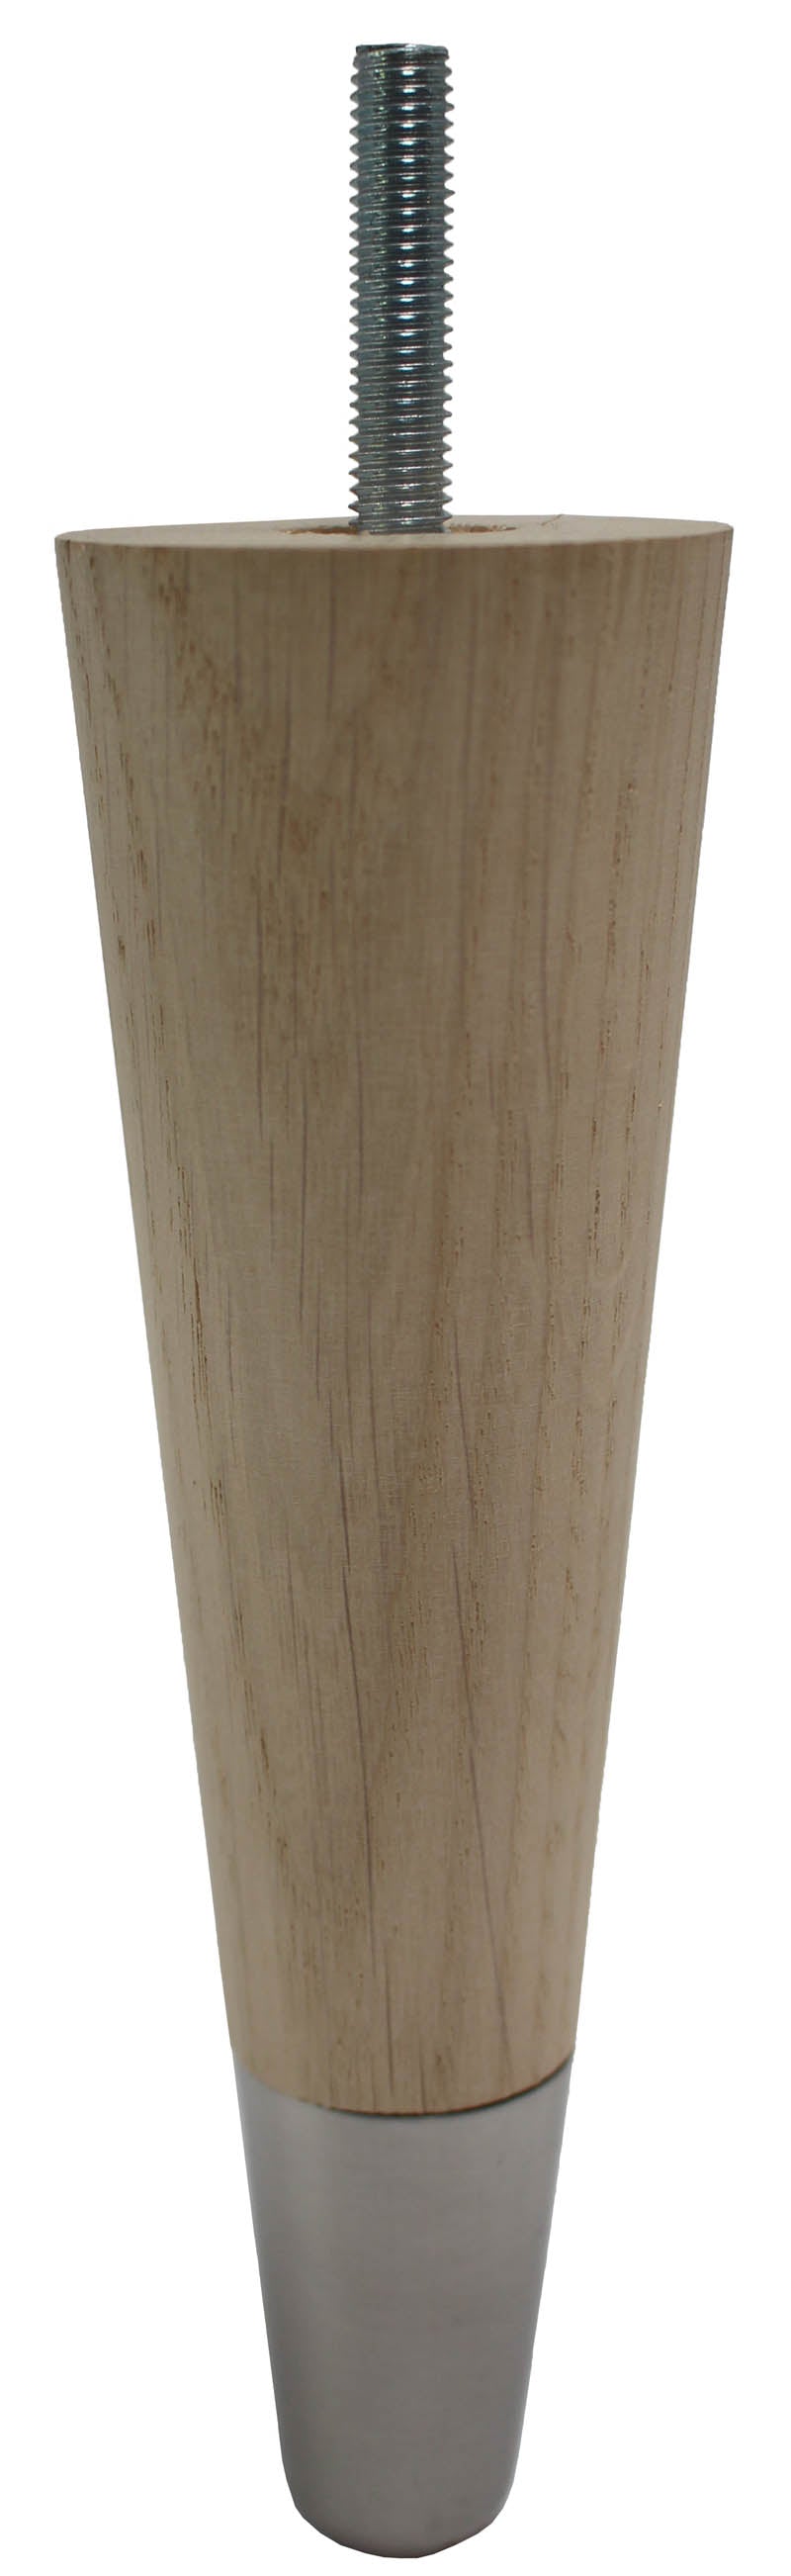 Carin Solid Oak Tapered Furniture Legs - Raw Finish - Satin Slipper Cups - Set of 4